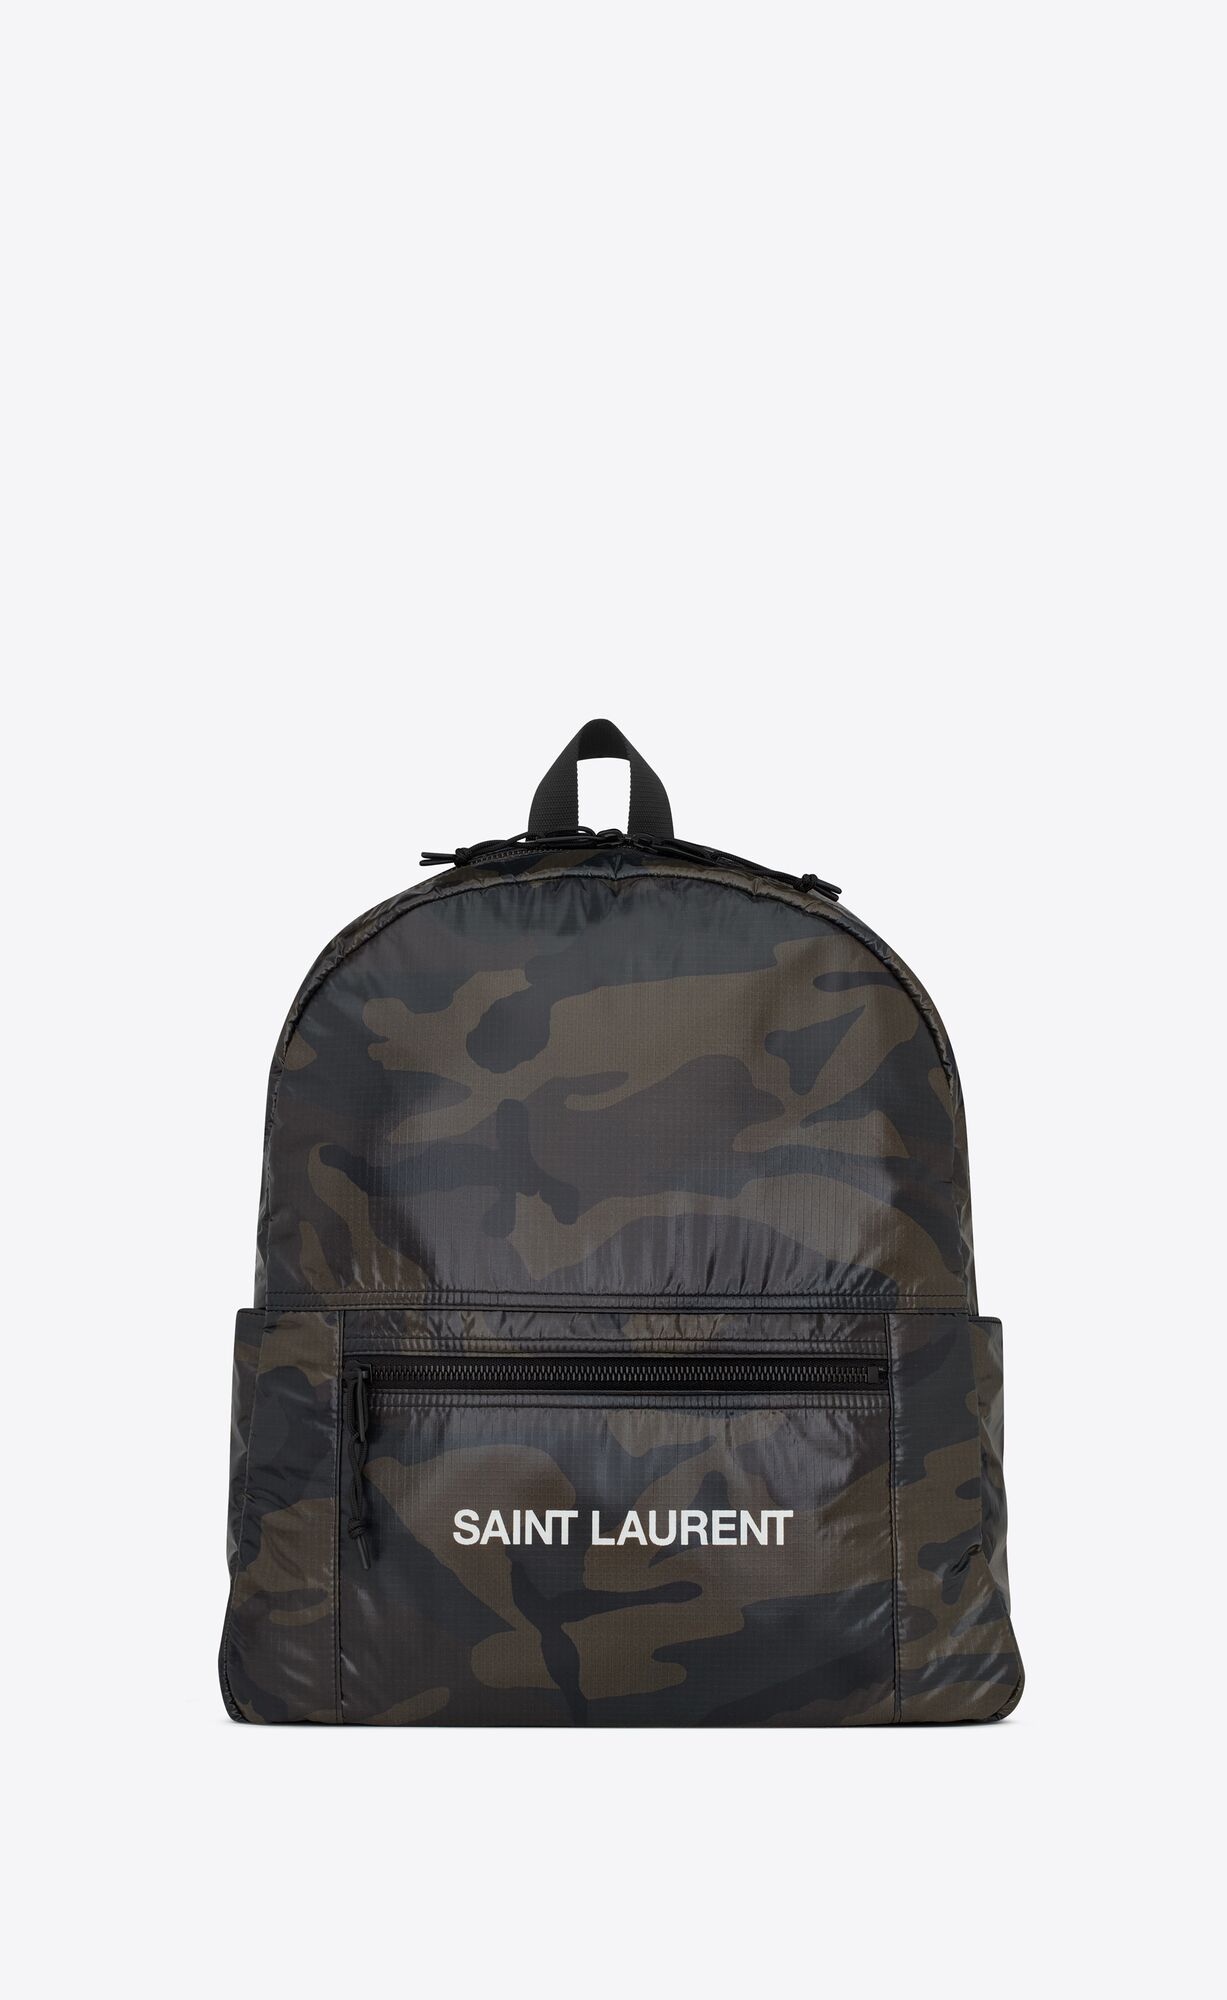 Saint Laurent Nuxx Backpack In Camo-print Nylon – Camouflage Kaki – 623698FAAEC3091